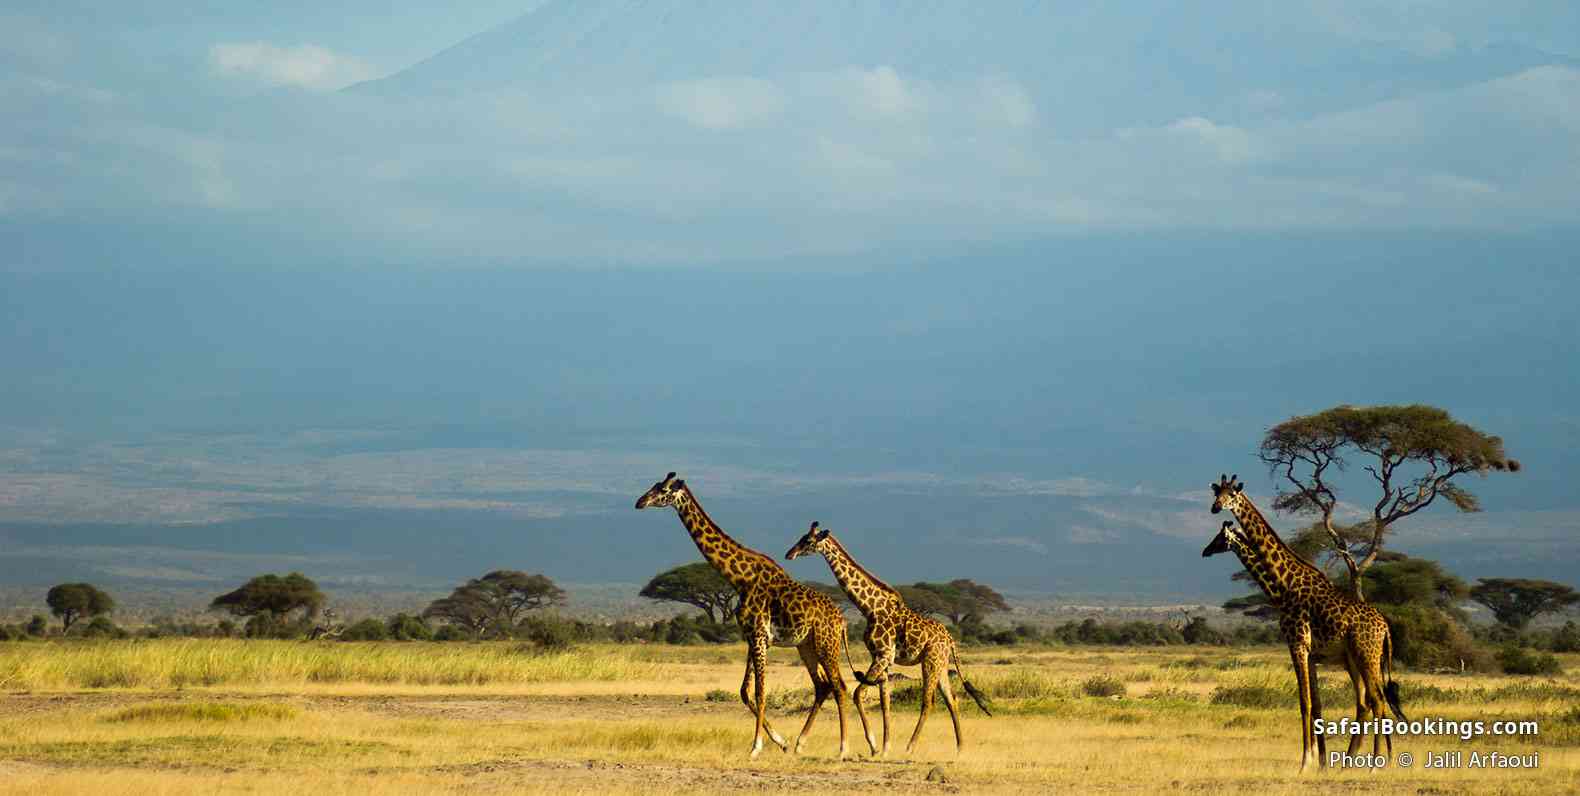 Four giraffes walking not that far from Africa's roof